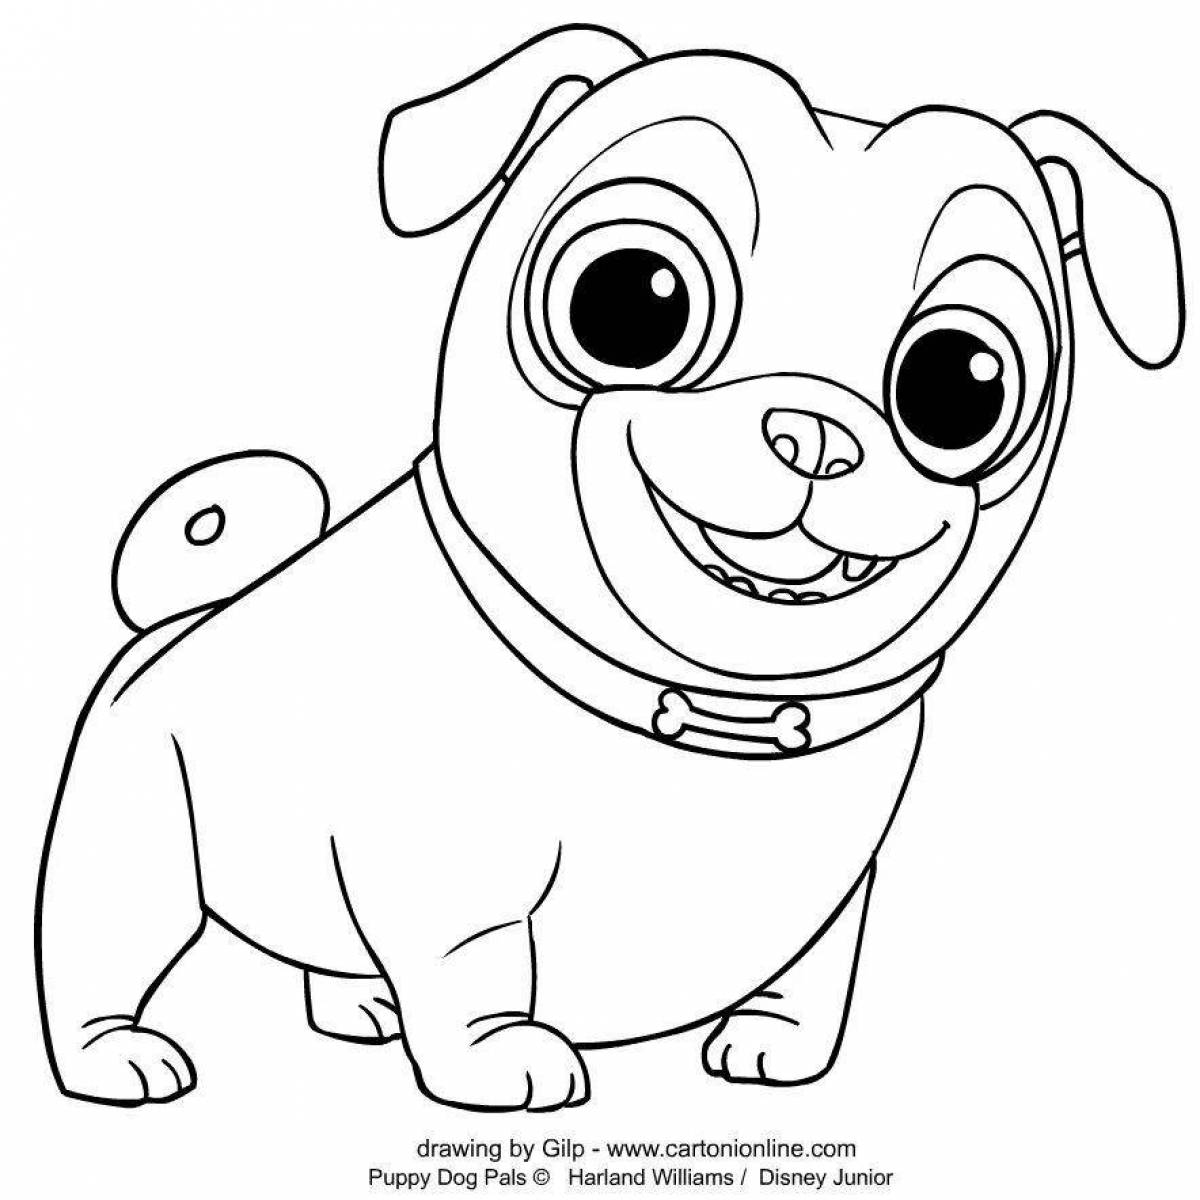 Sweet-eyed dog coloring page